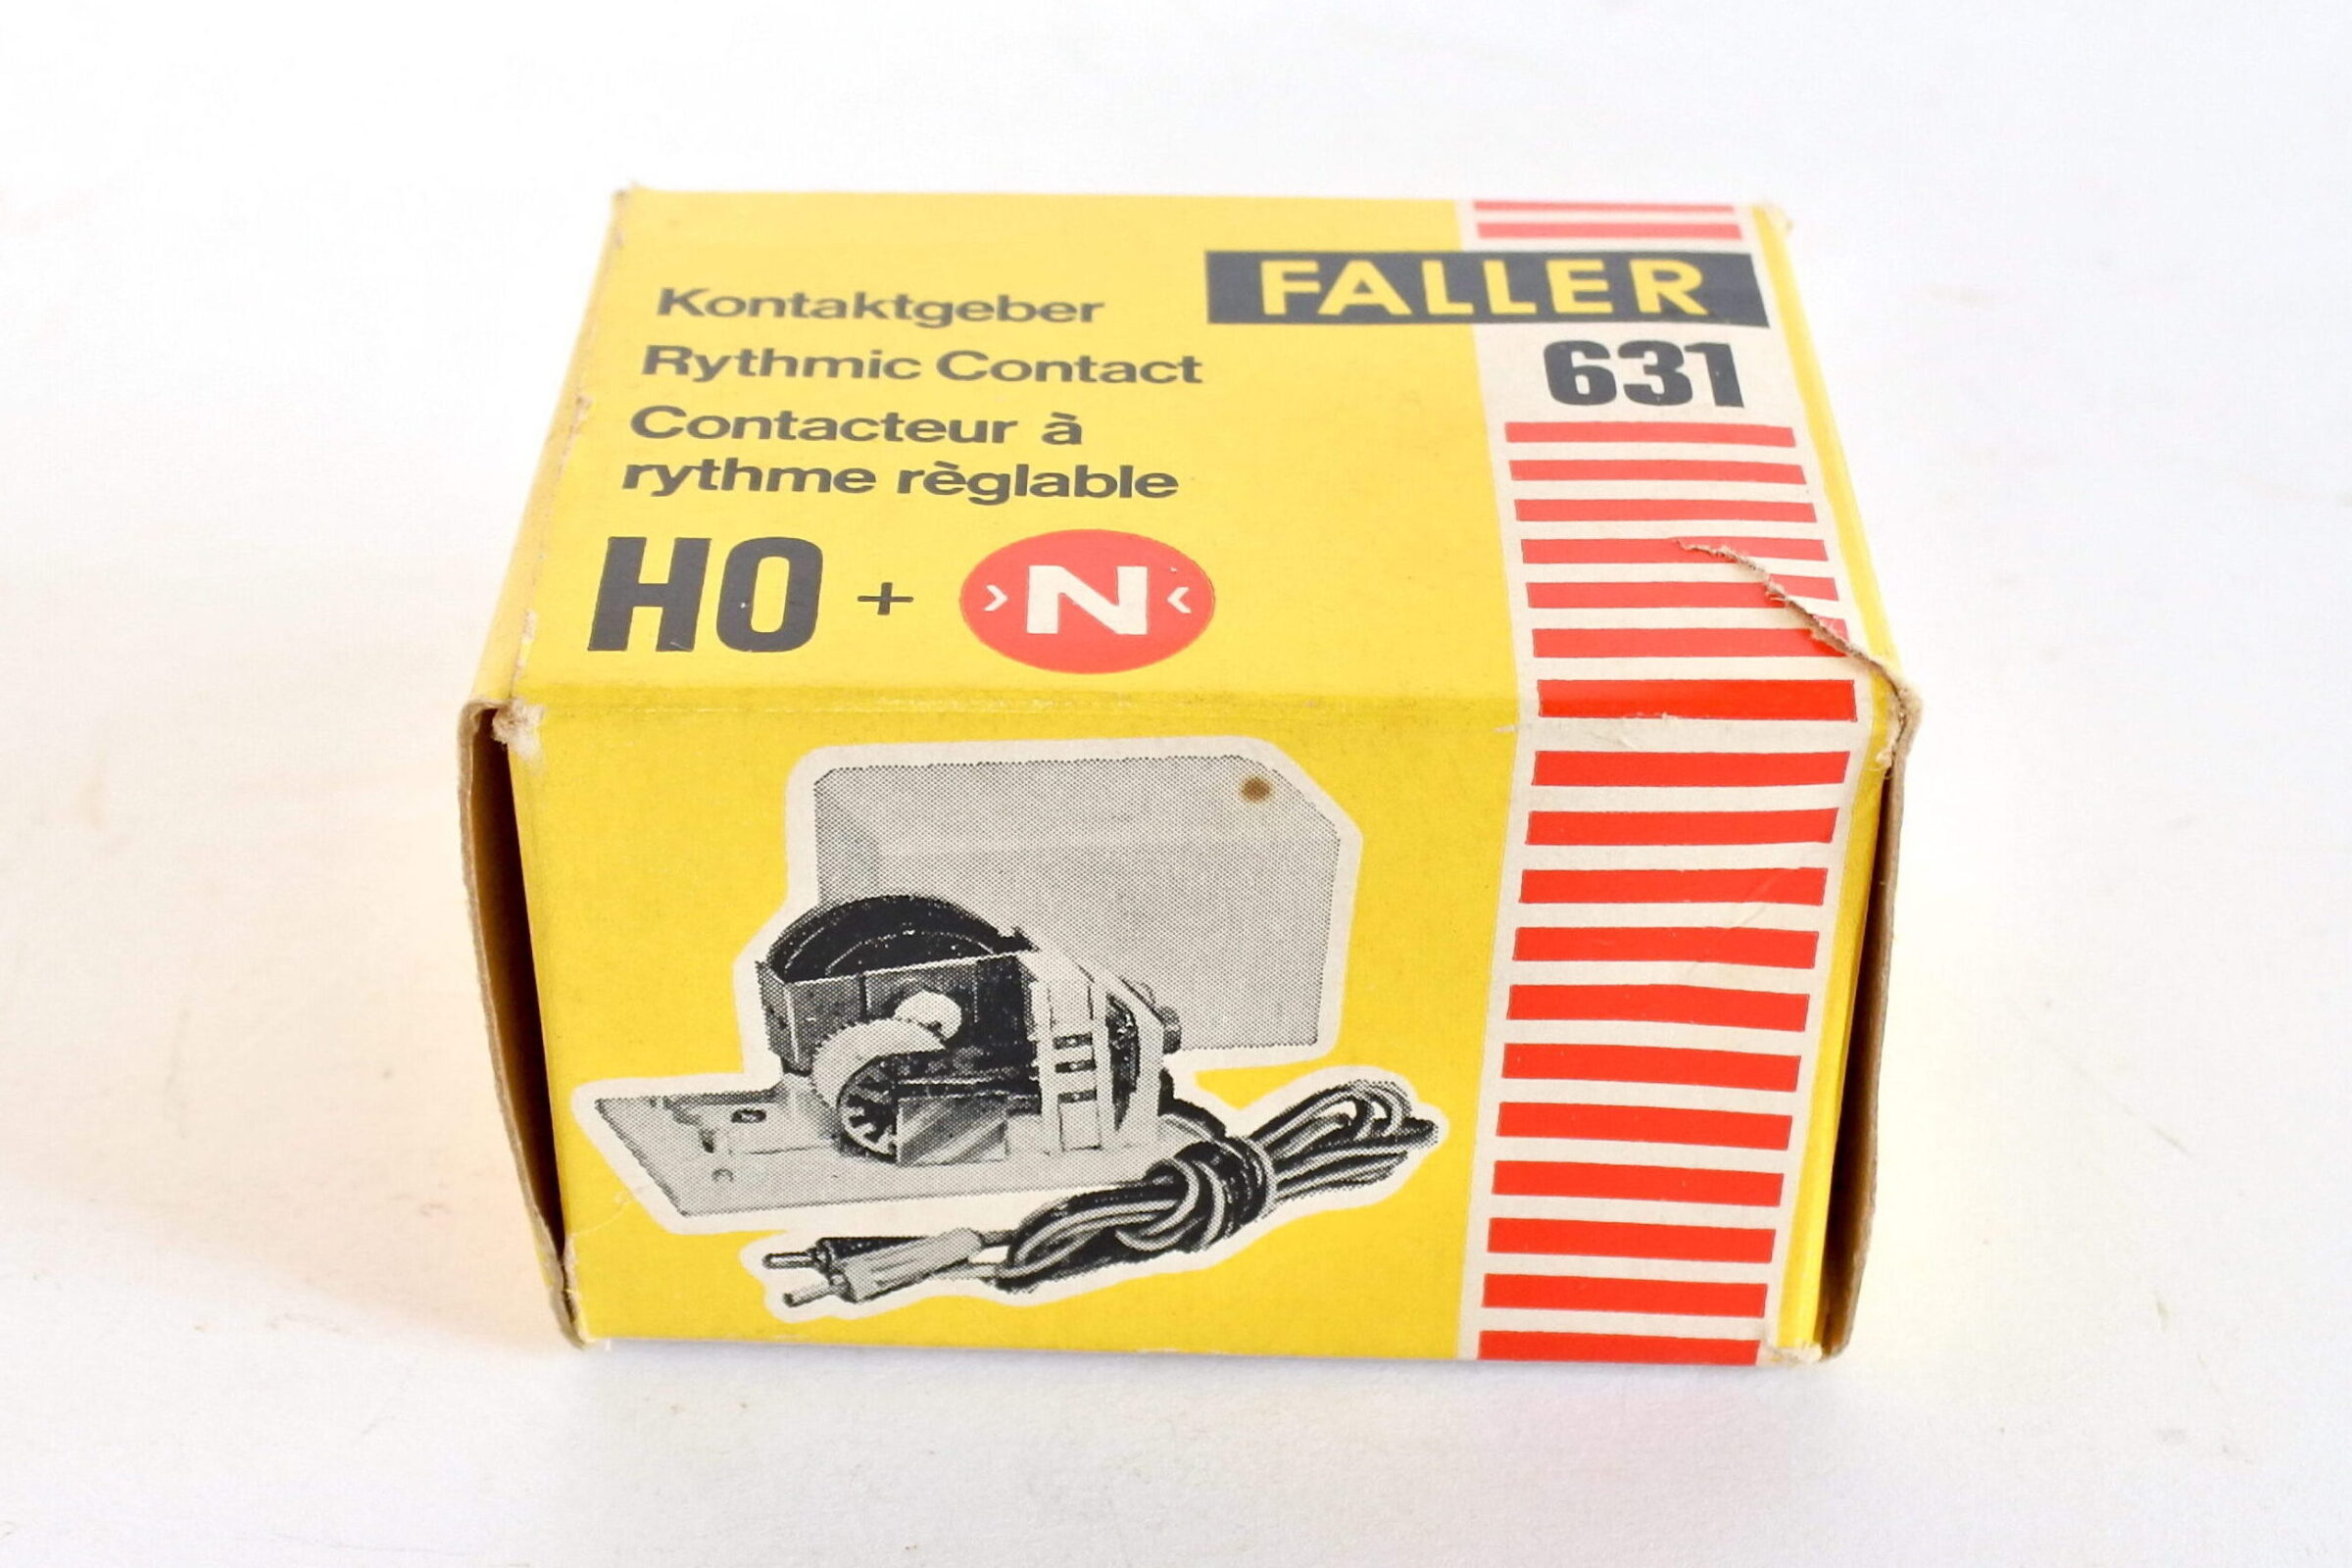 Generatore di impulsi Faller 631 H0 + N con scatola originale - 6